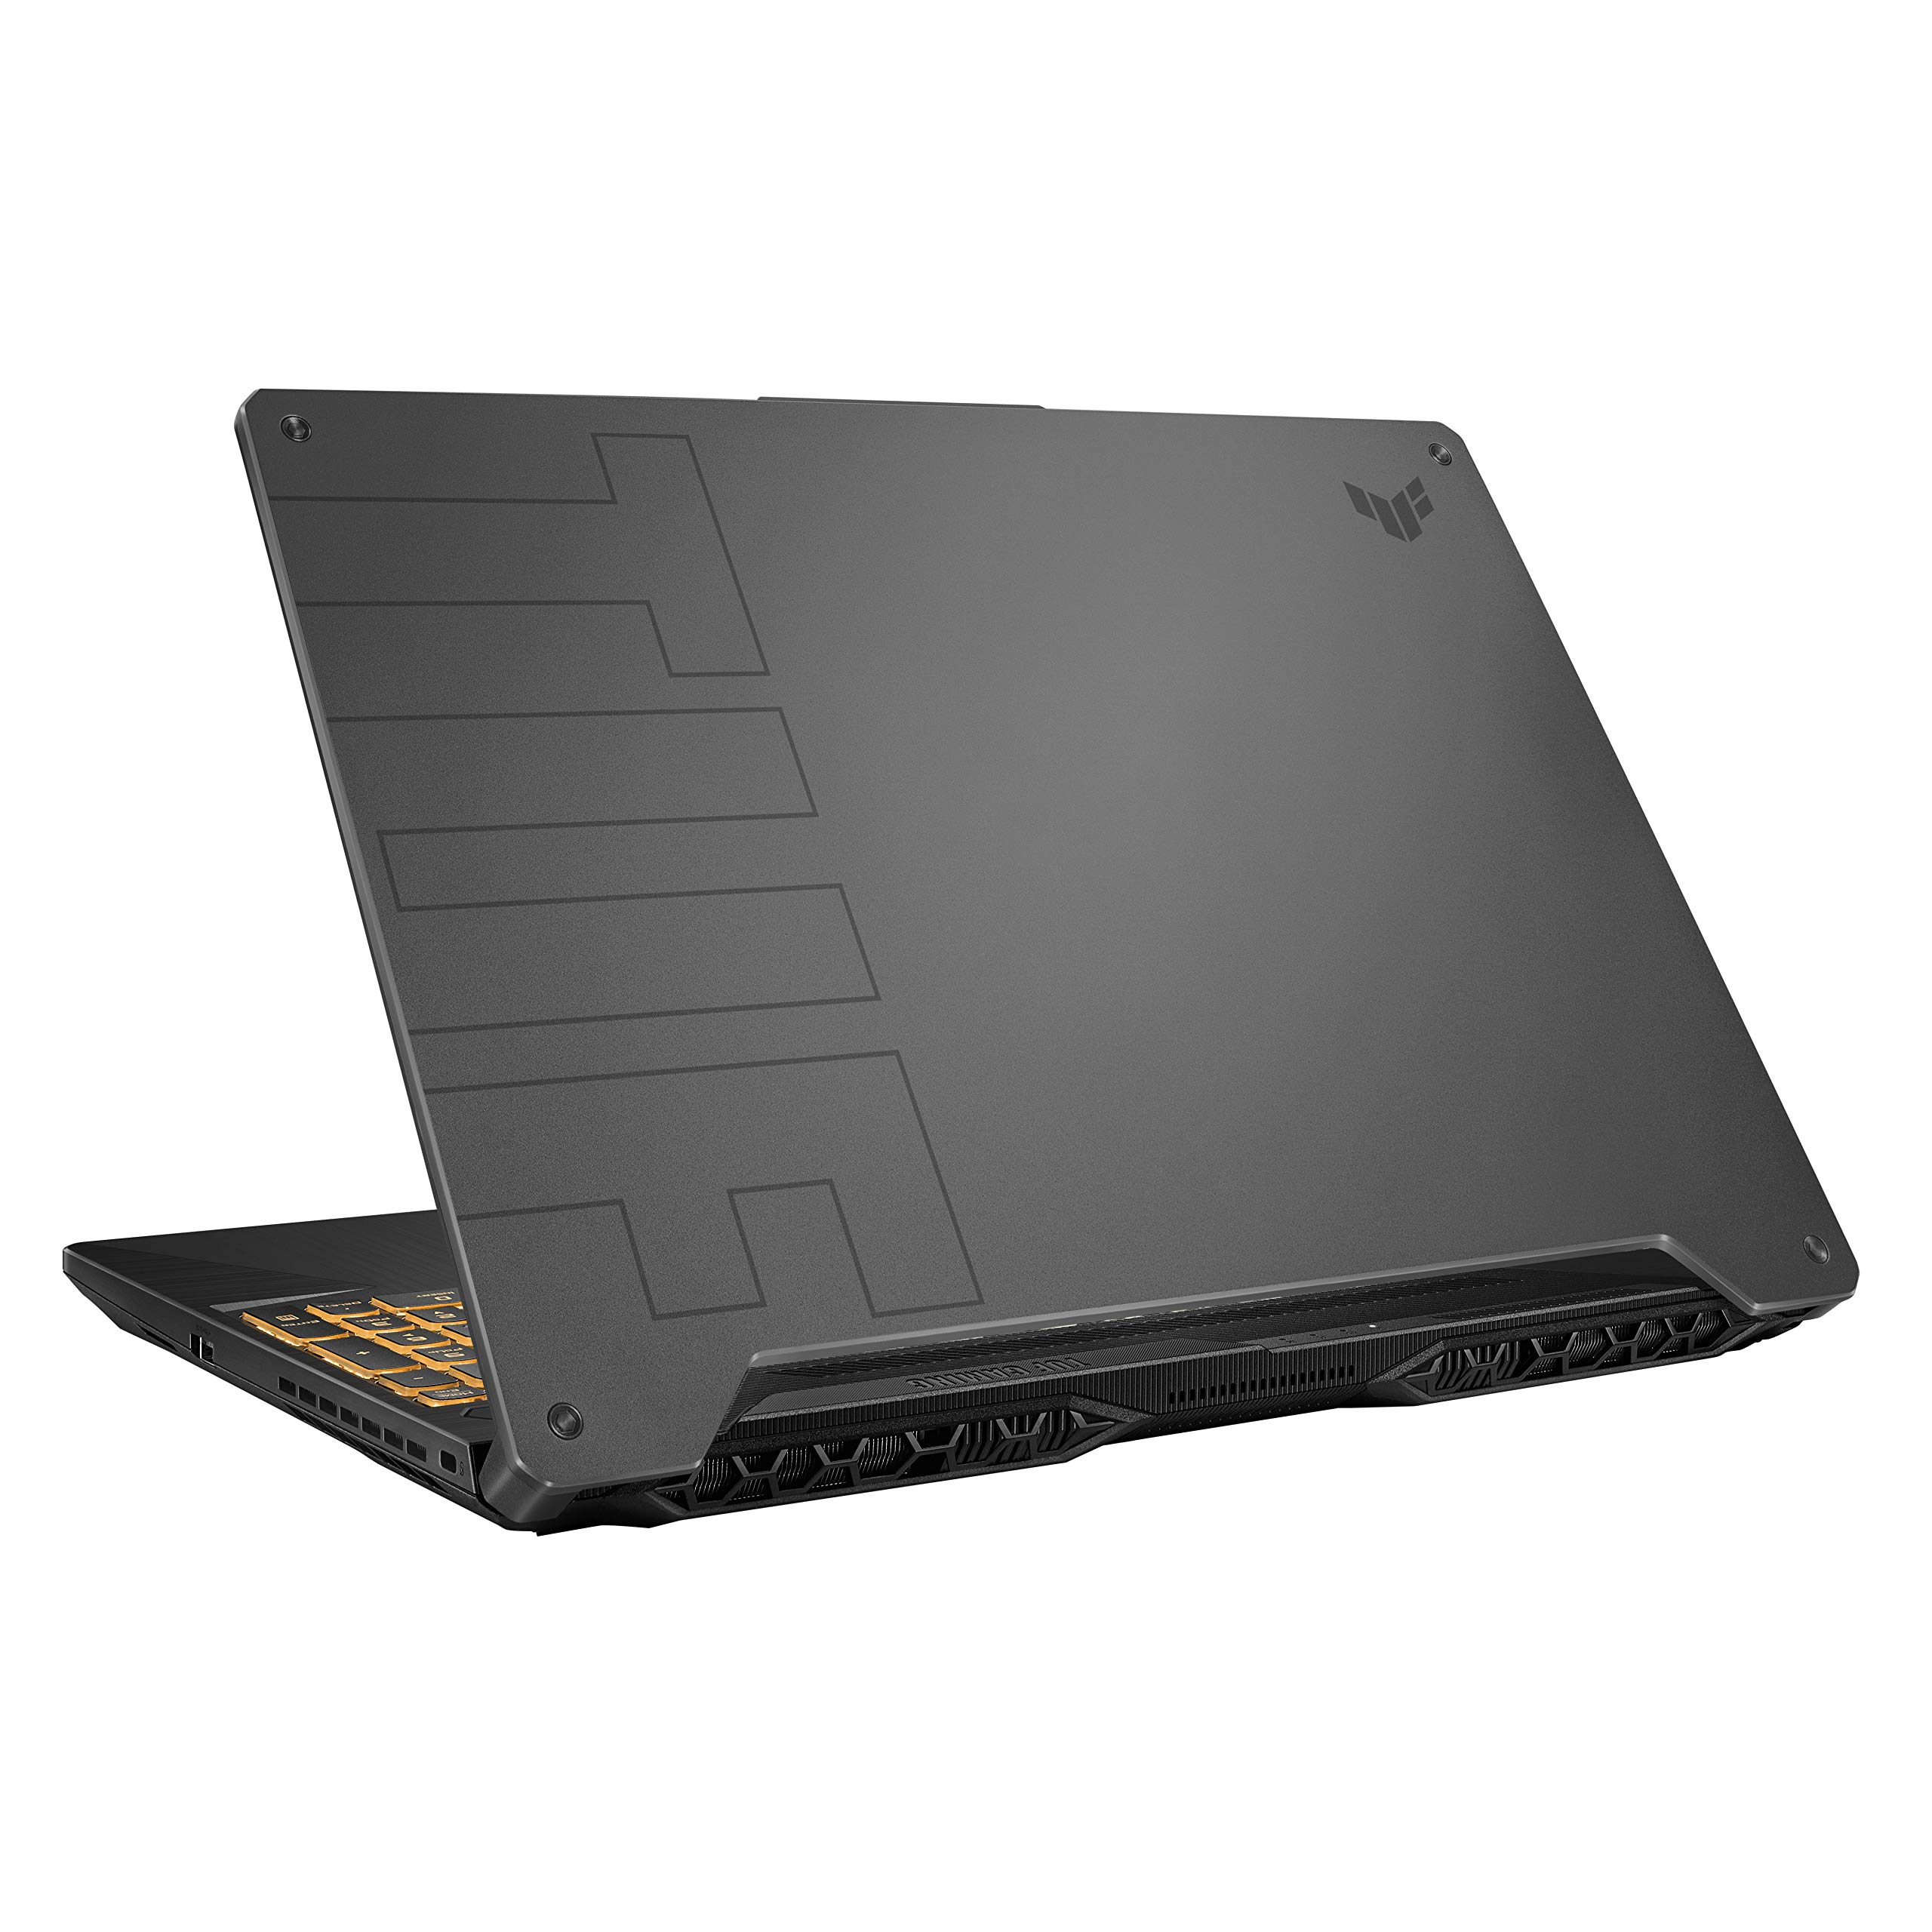 ASUS TUF Gaming F15 Gaming Laptop, 15.6” 144Hz FHD IPS-Type Display, Intel Core i7-11800H Processor, GeForce RTX 3060, 16GB DDR4 RAM, 1TB PCIe SSD, Wi-Fi 6, Windows 10 Home, TUF506HM-ES76